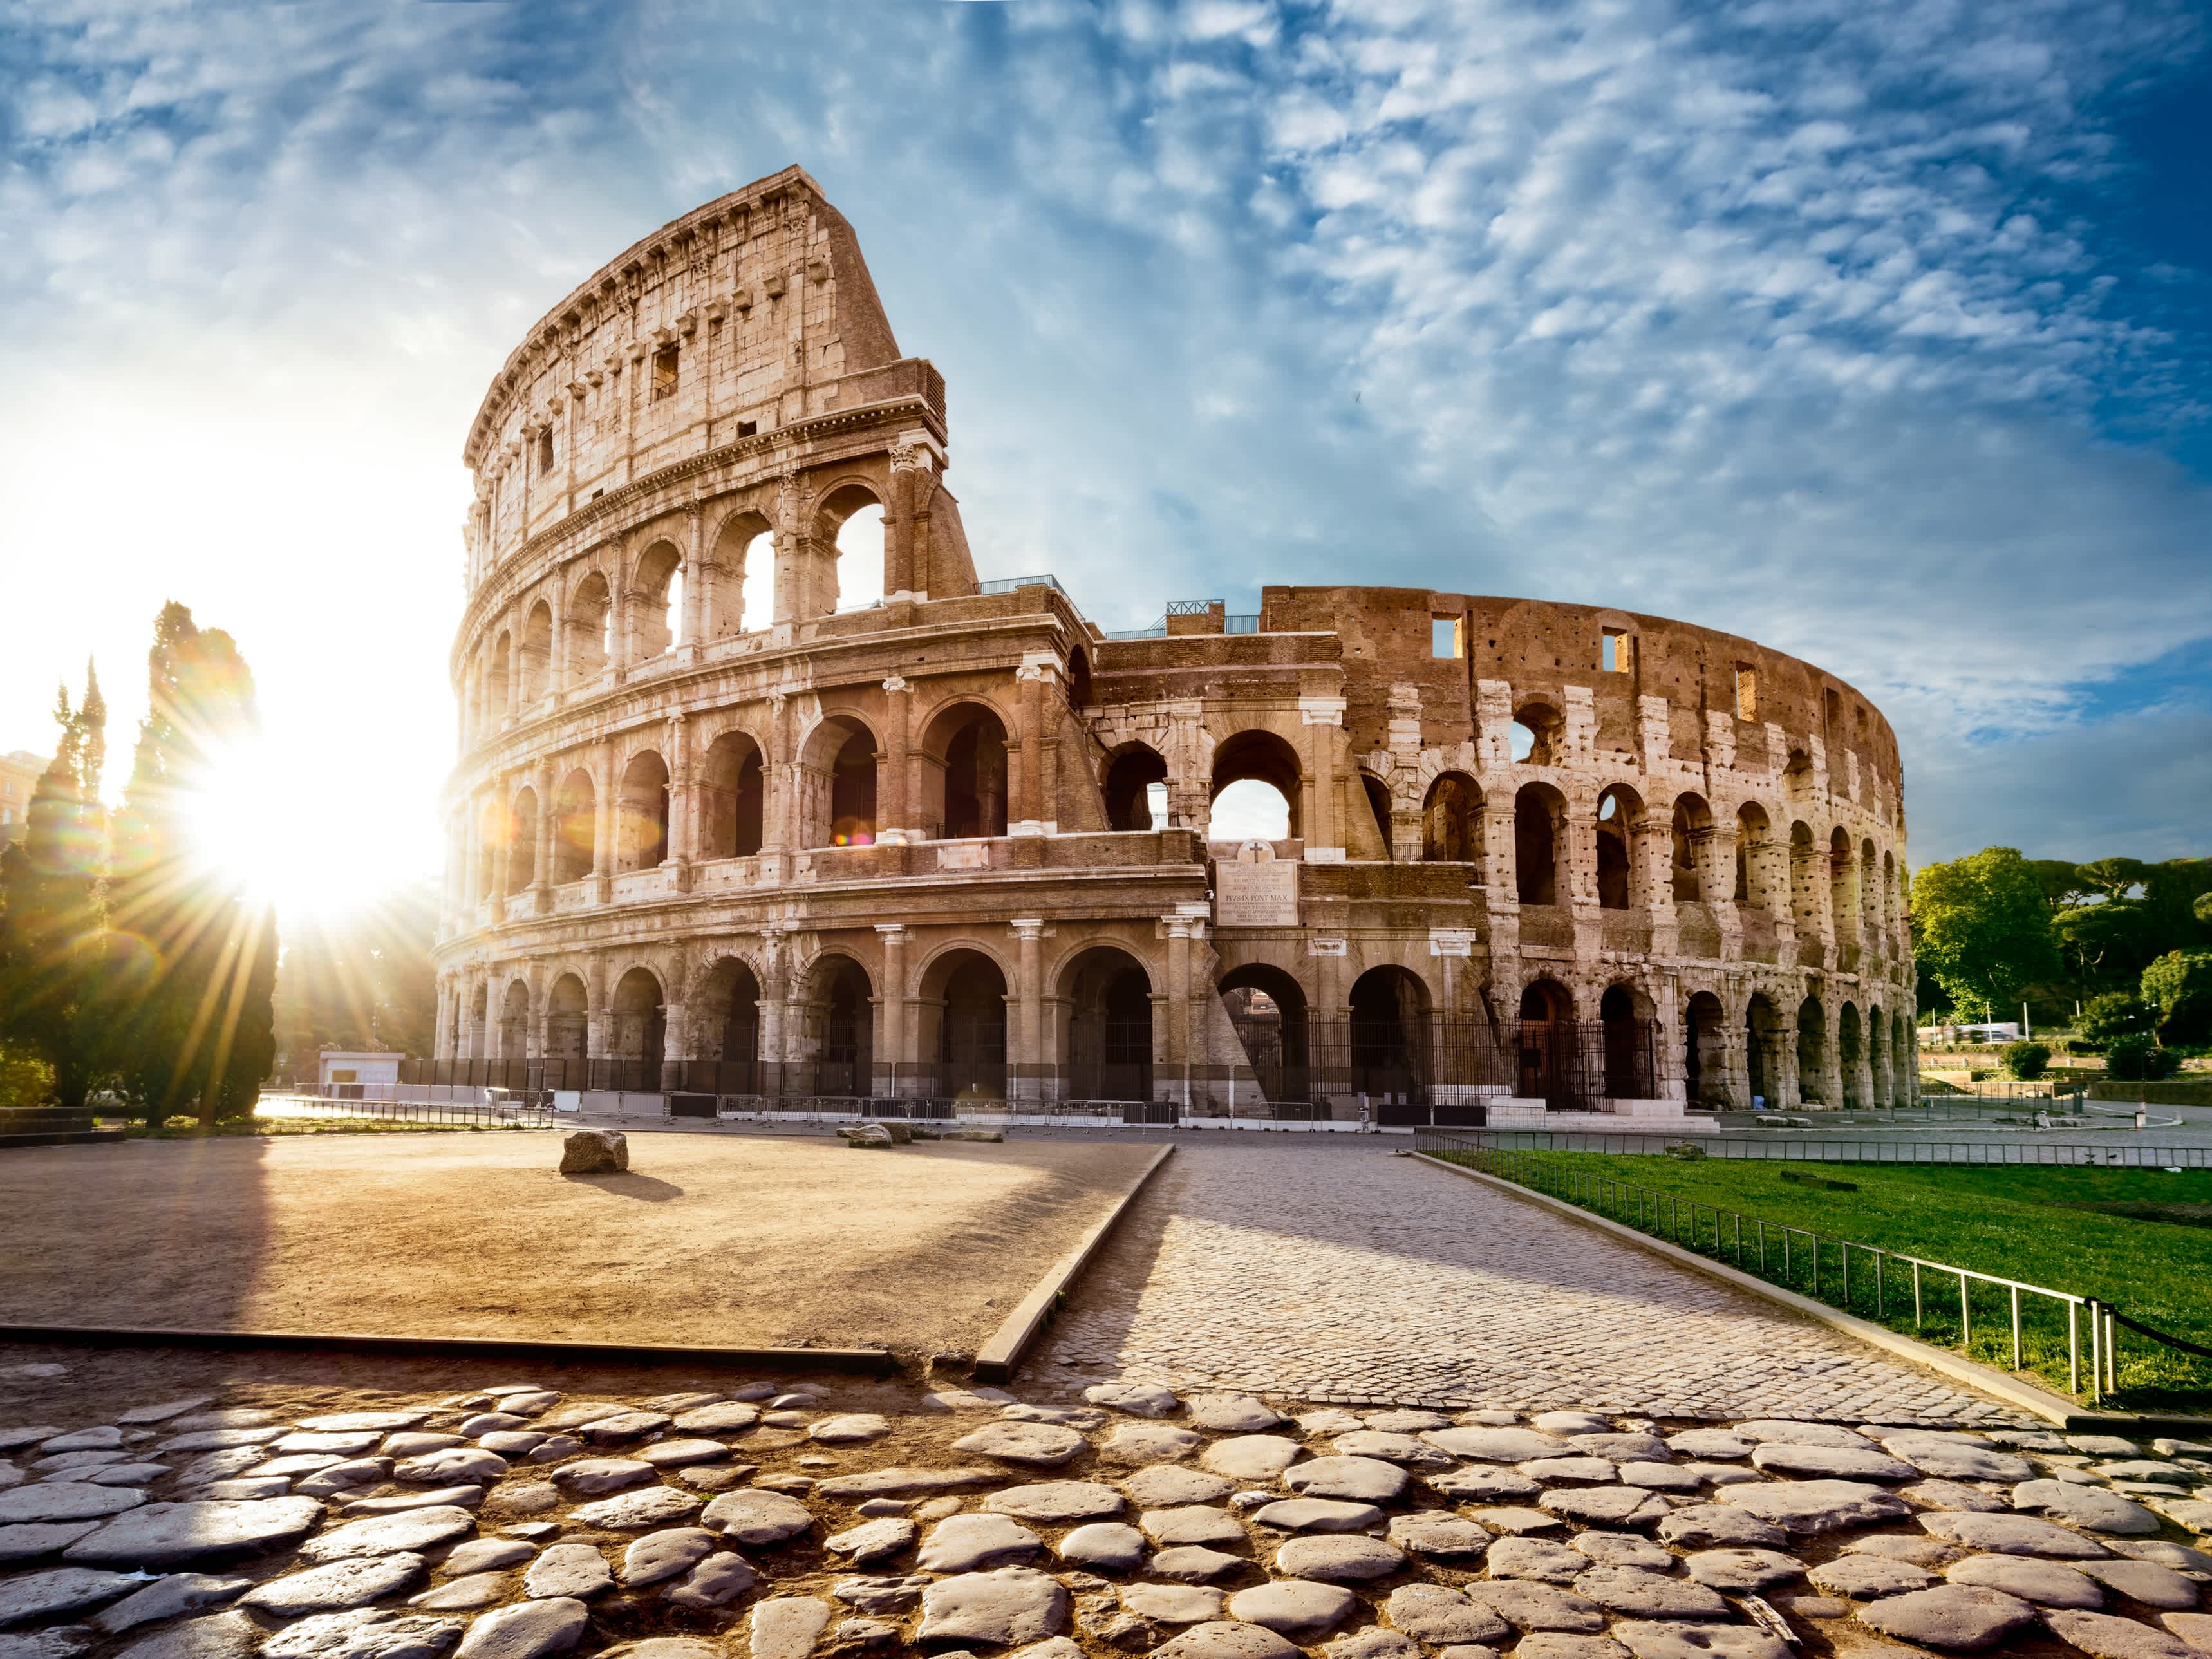 Europe - Italy - Rome - Colosseum